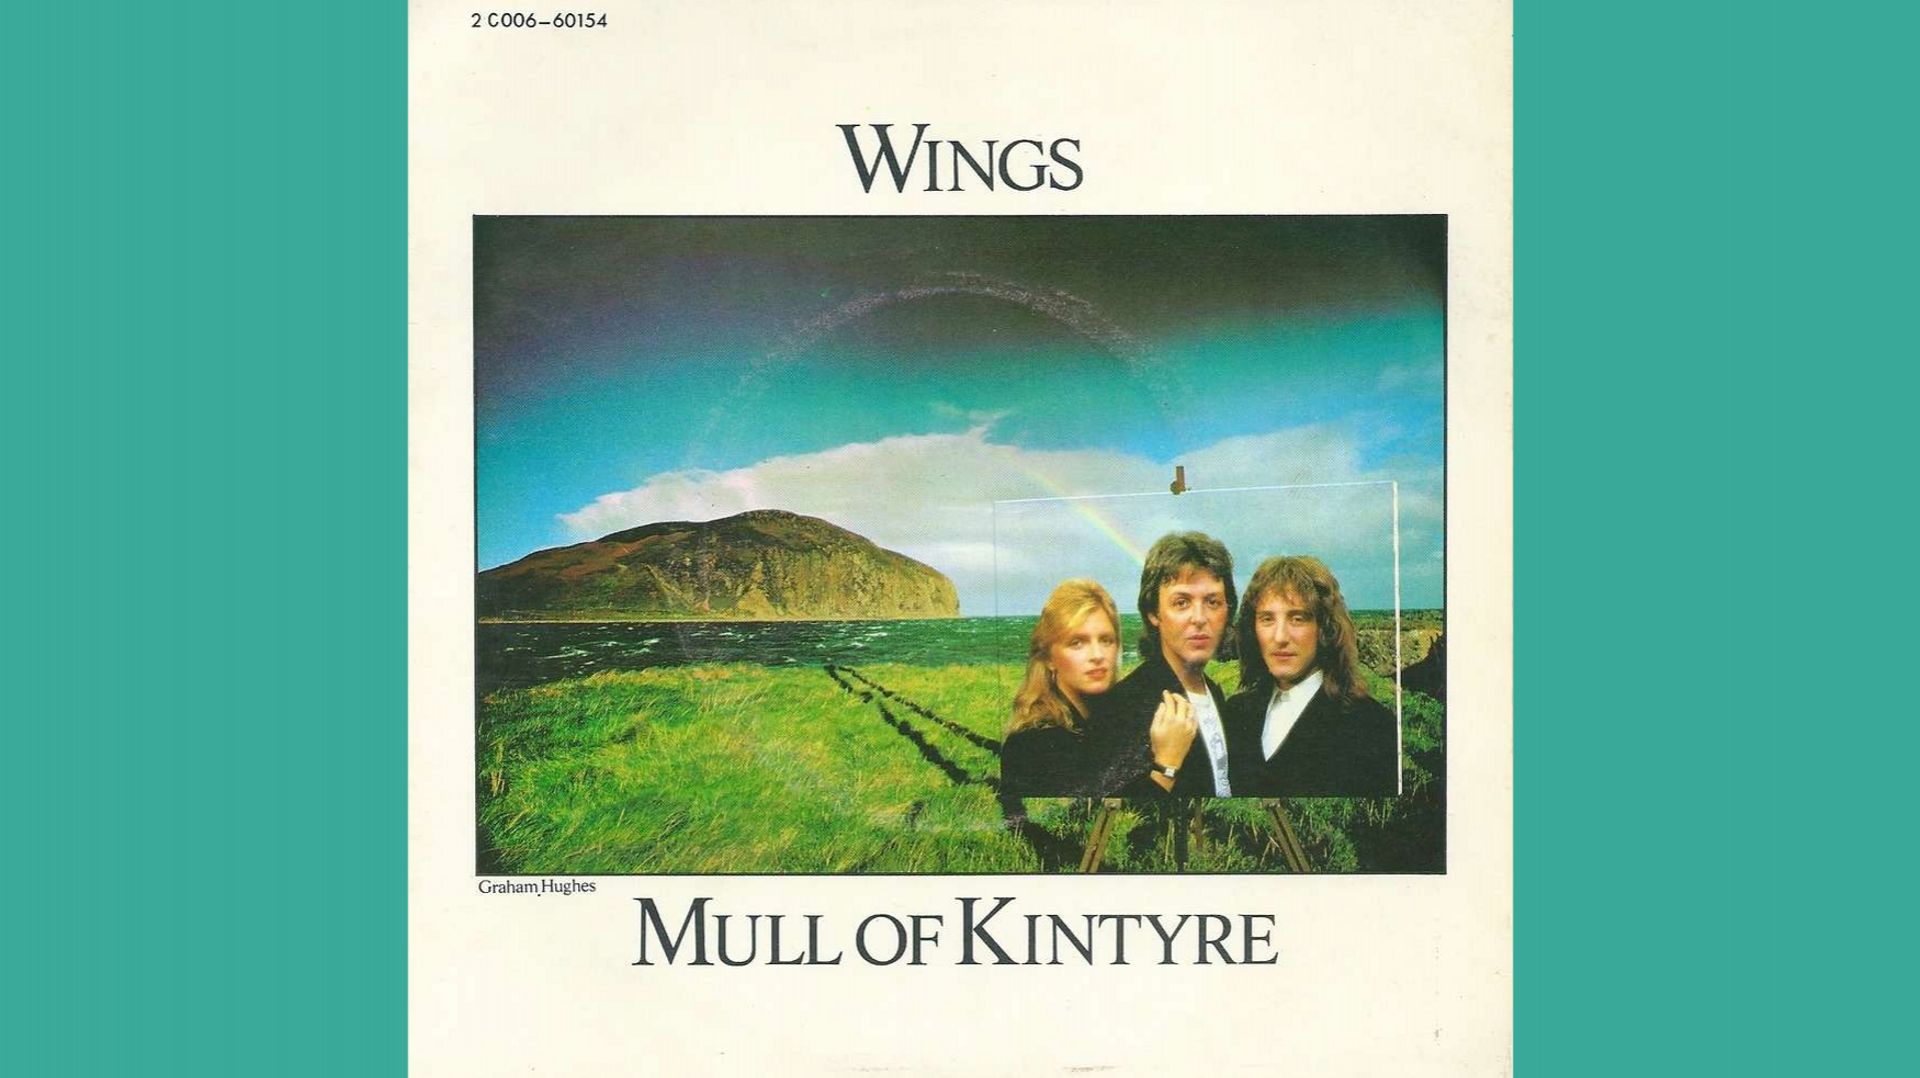 Mull of kintyre. Mull of Kintyre CD.